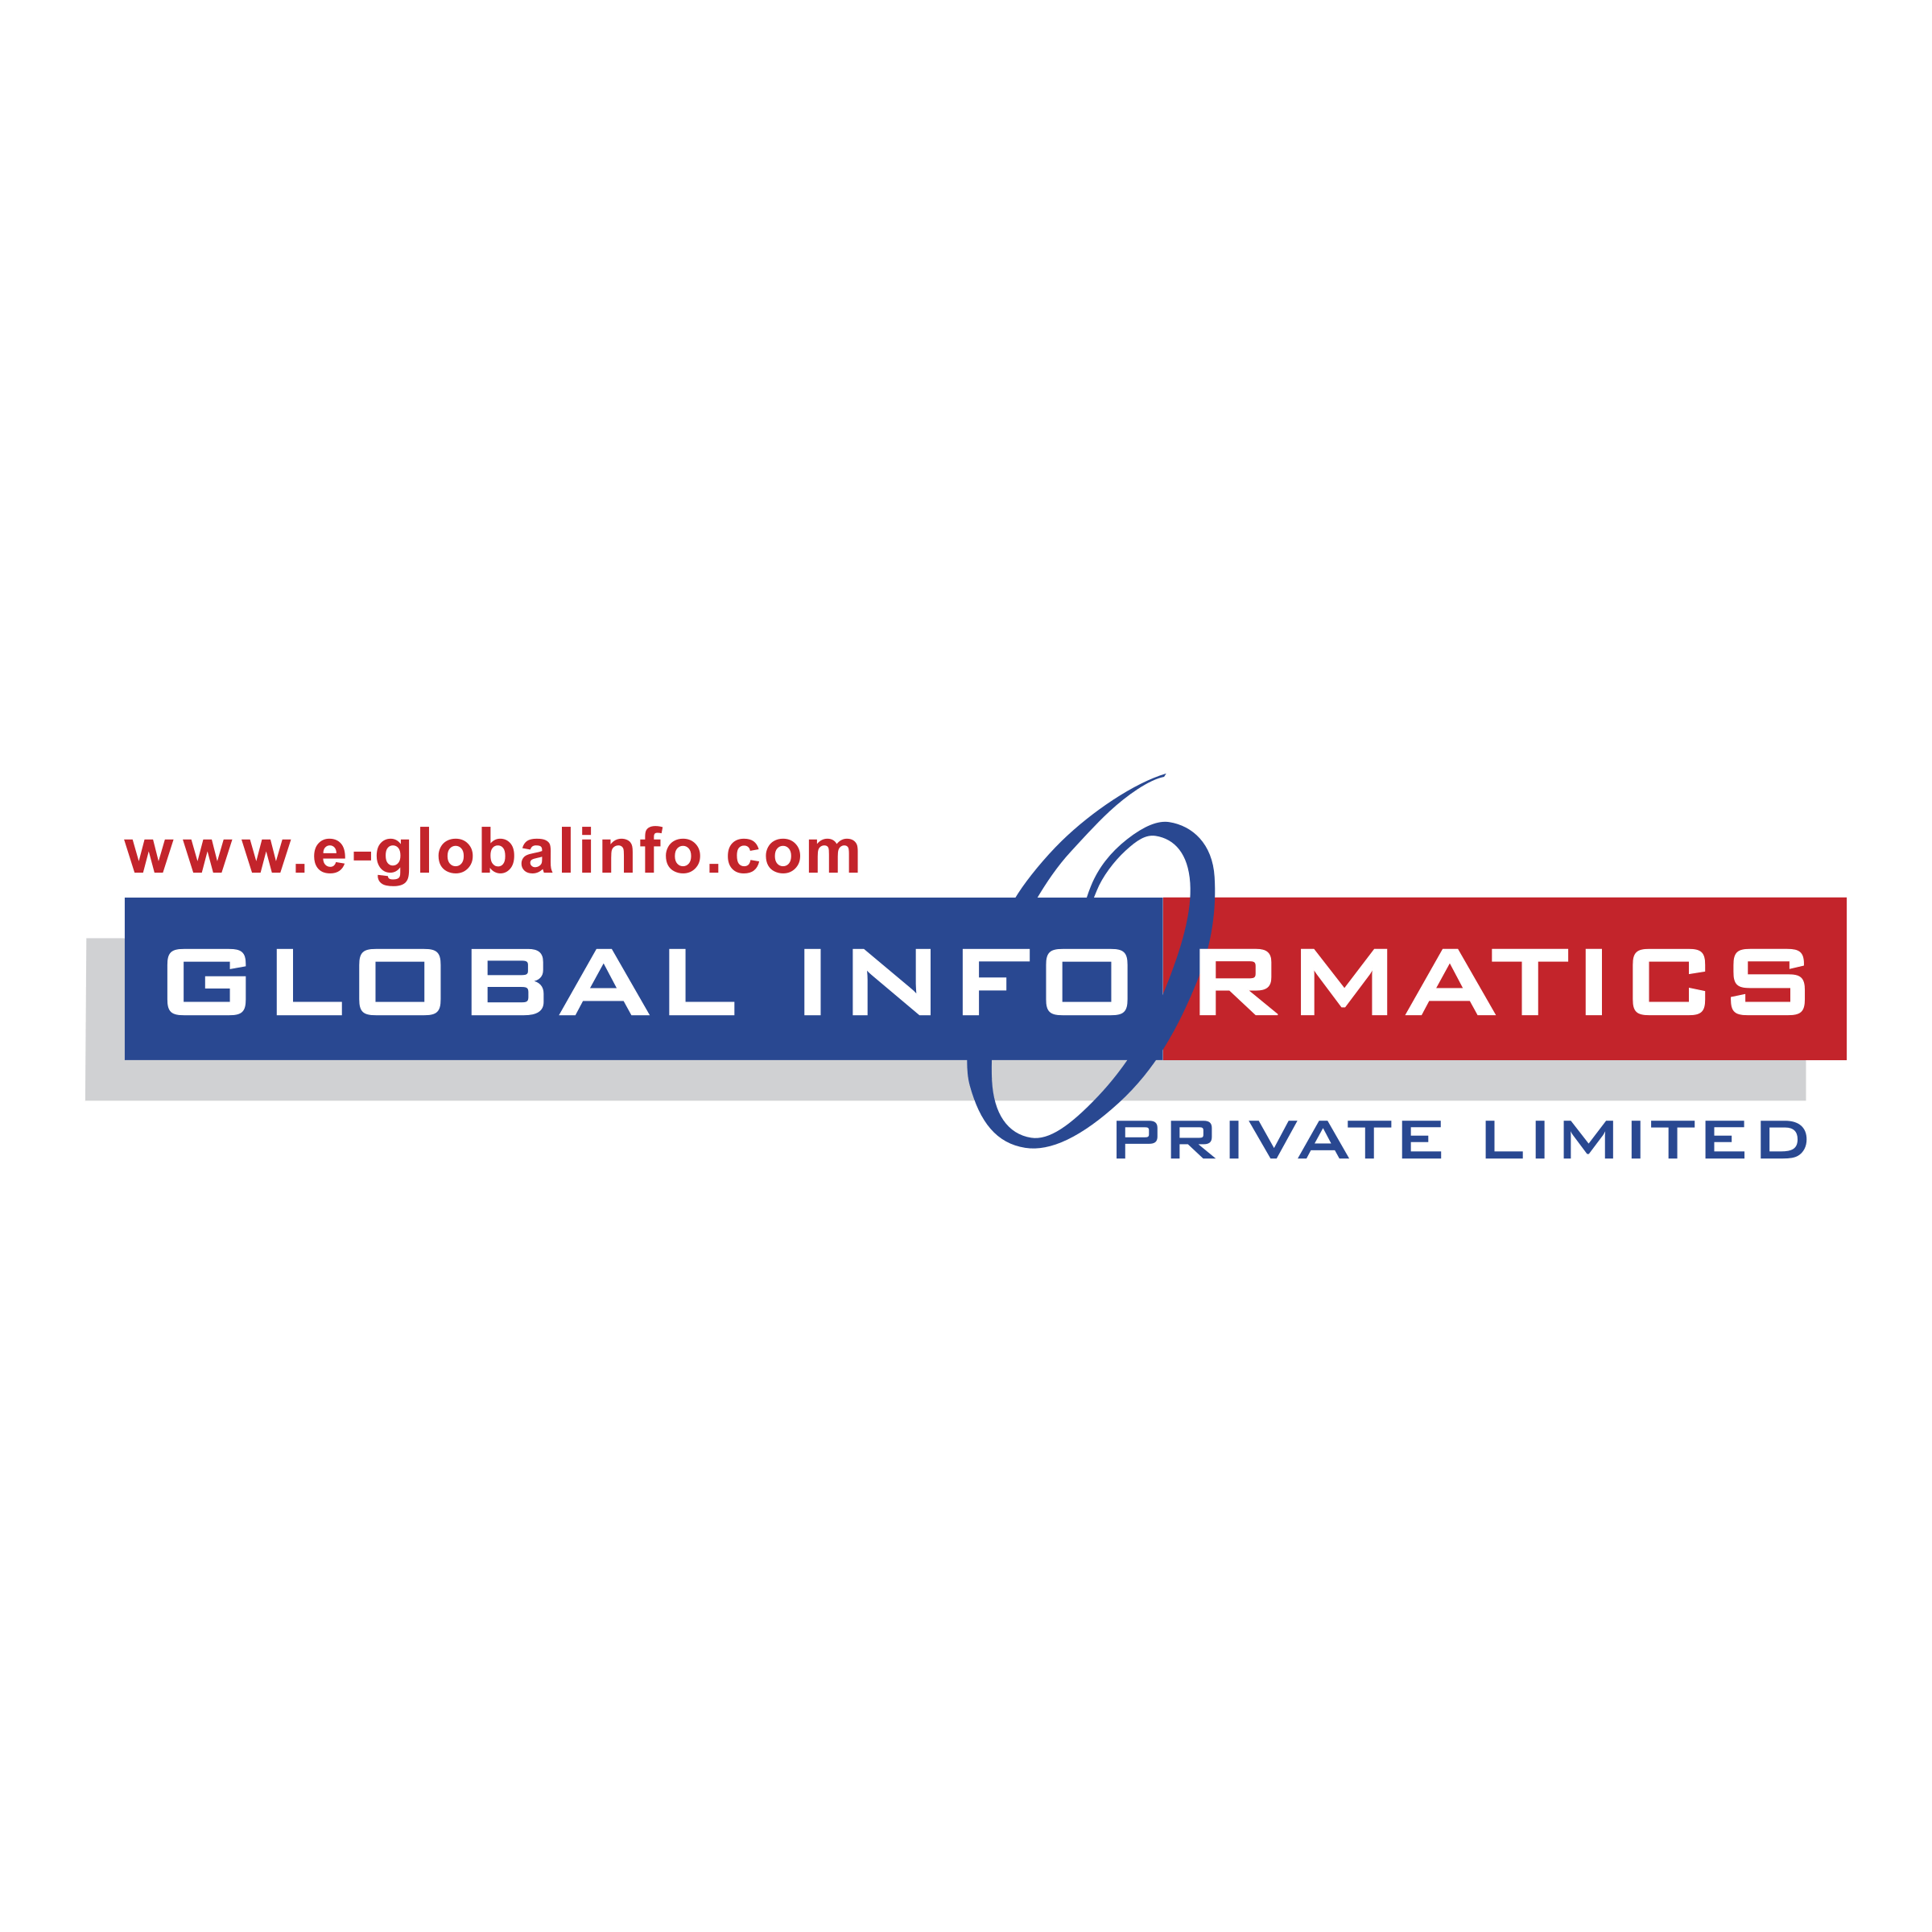 Informatics Logo - Global Informatics Pvt Ltd Logo PNG Transparent & SVG Vector ...